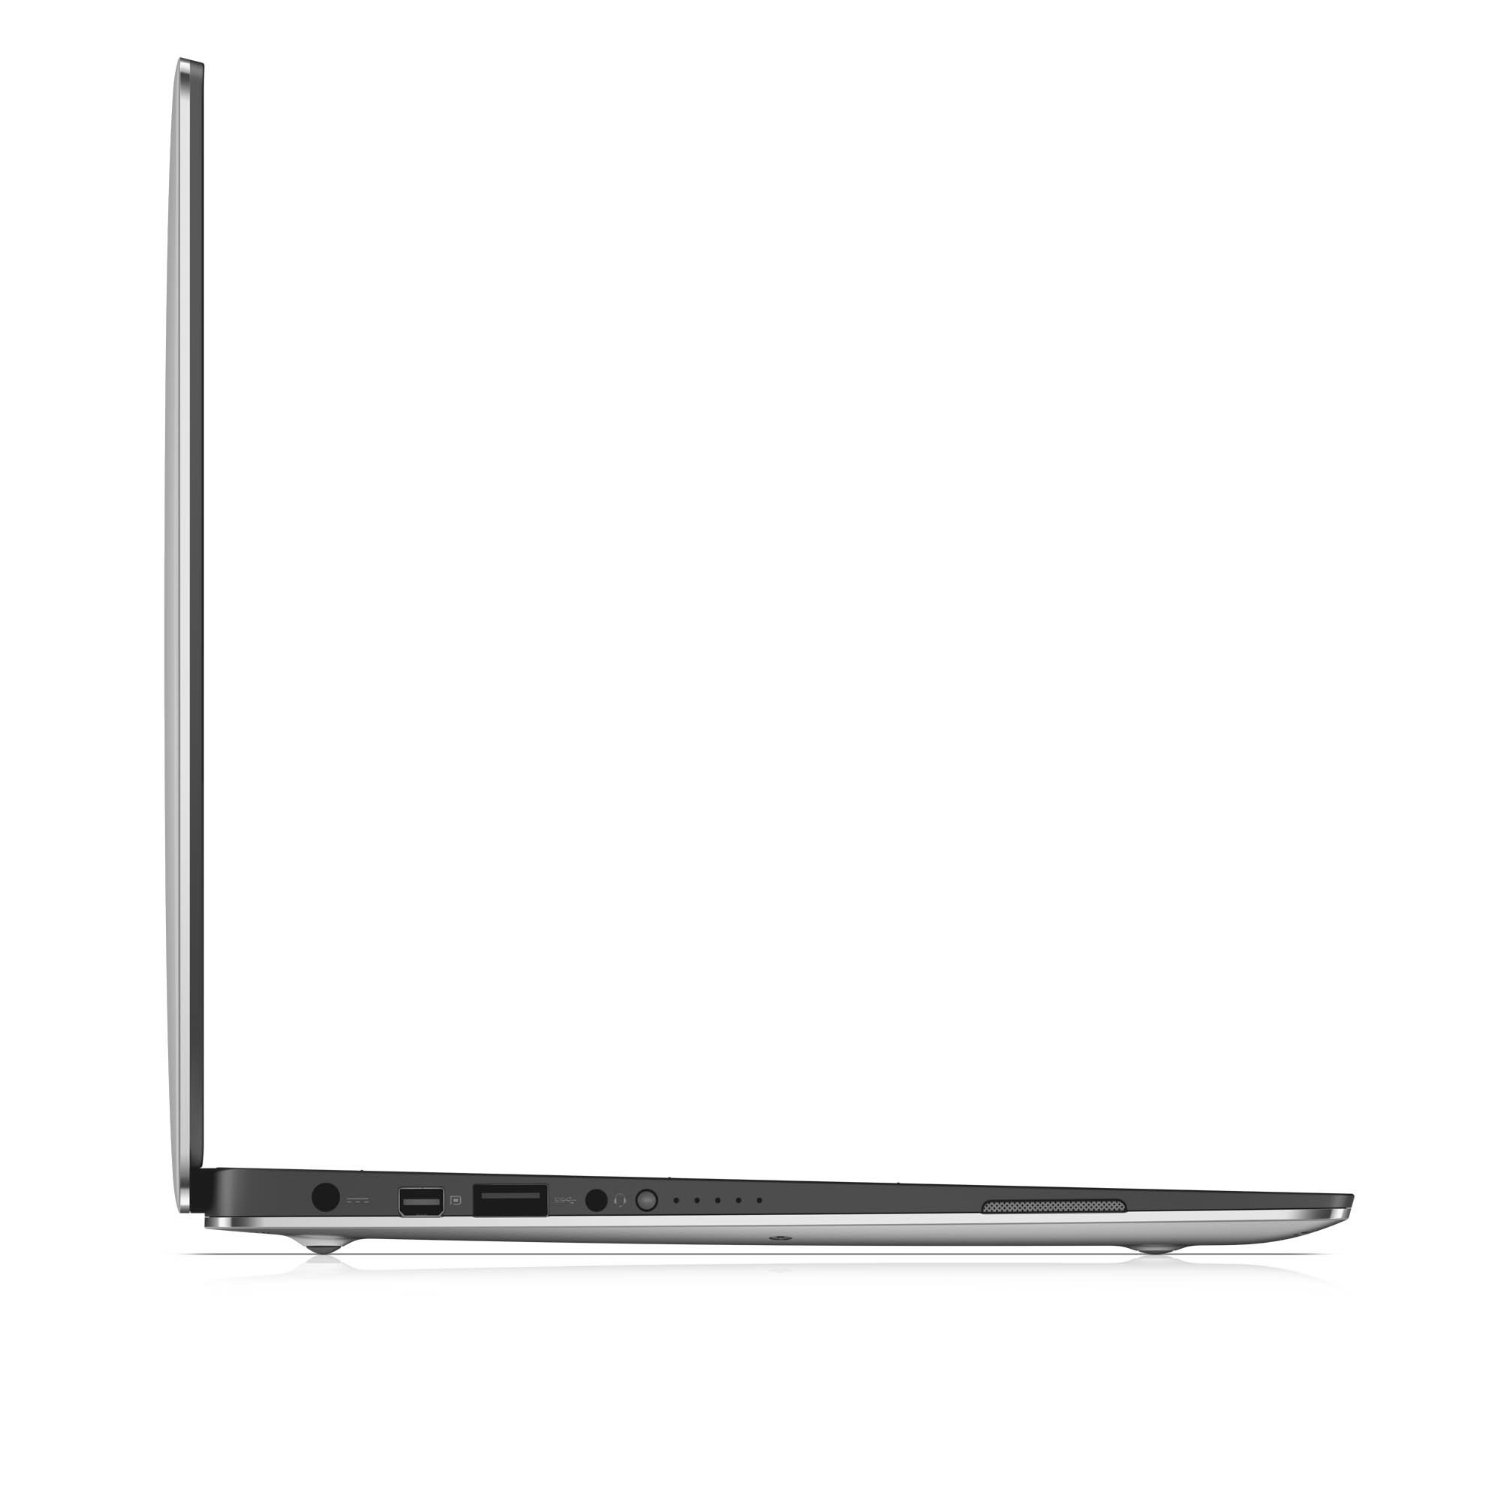 Dell XPS13 Laptop Review